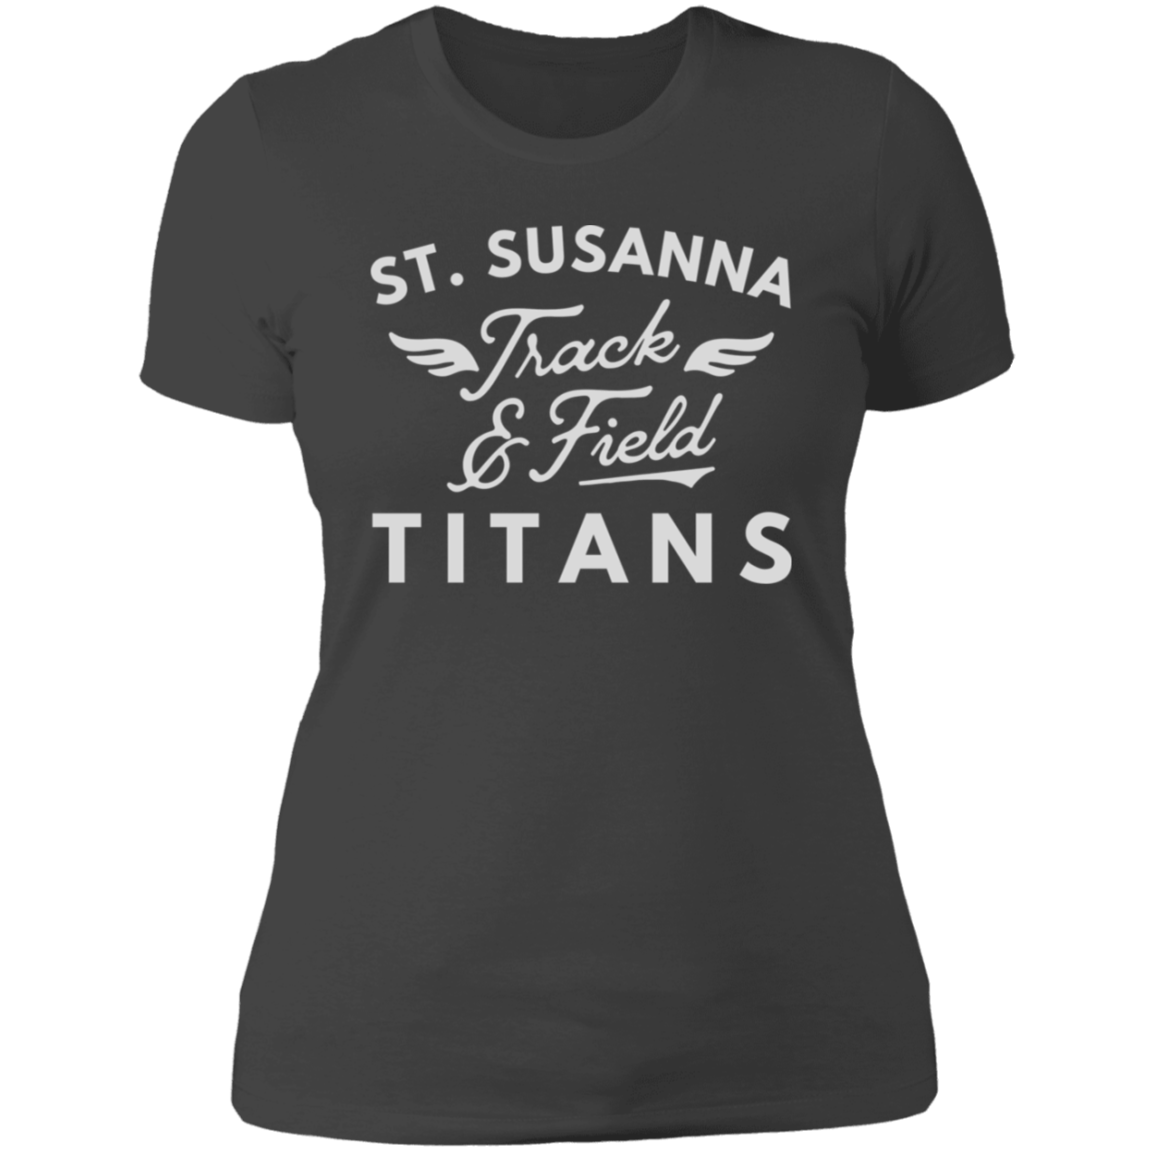 St. Susanna Titans Track and Field Wings Ladies' Boyfriend T-Shirt